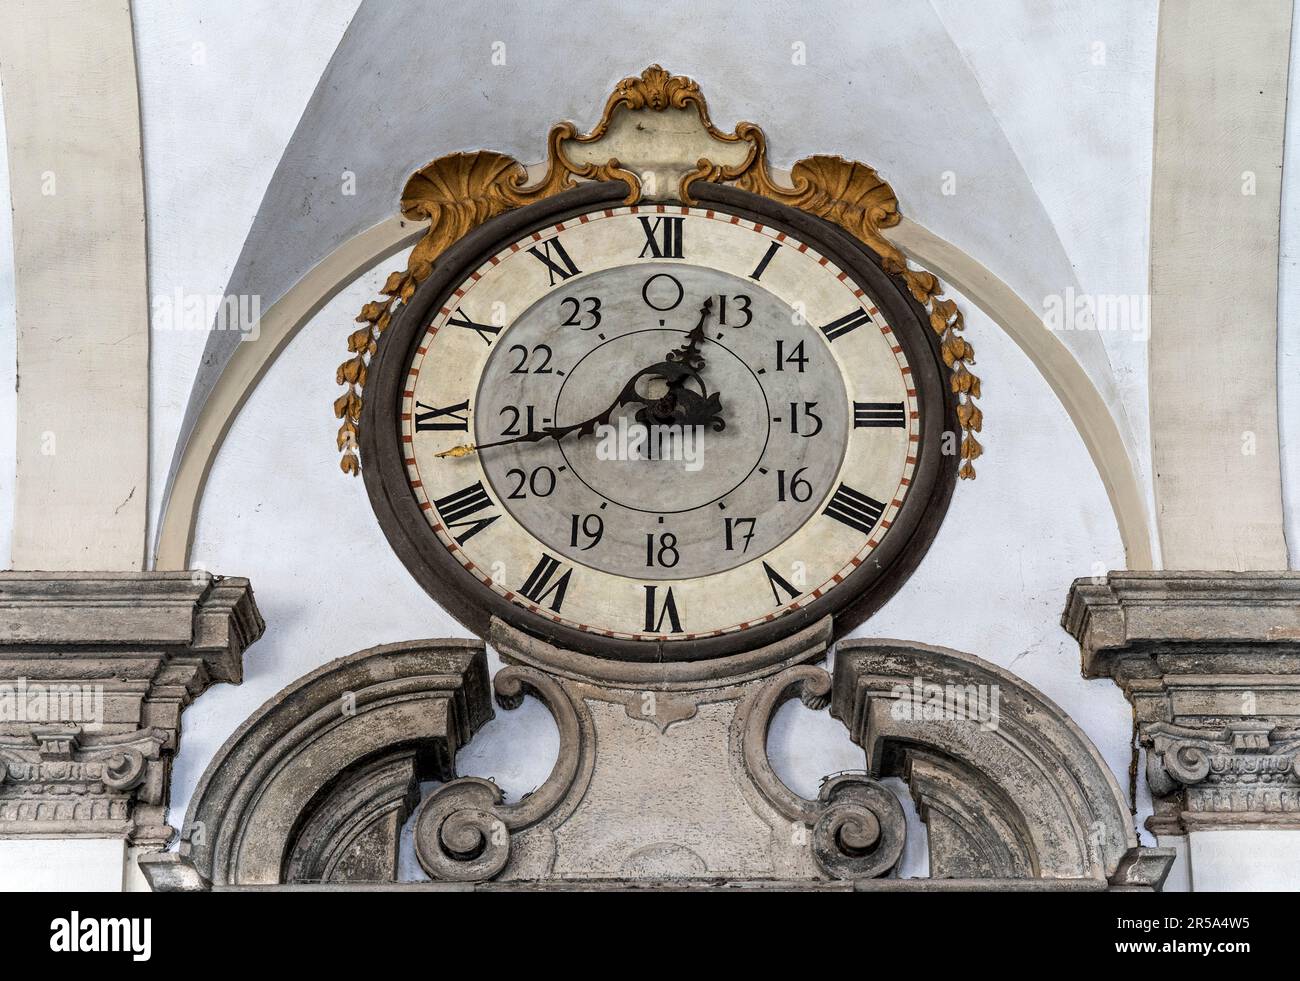 The old clock above the entrance of the 'Pinacoteca di Brera' (Brera Art Gallery) in Brera district, Milano city center, Italy Stock Photo